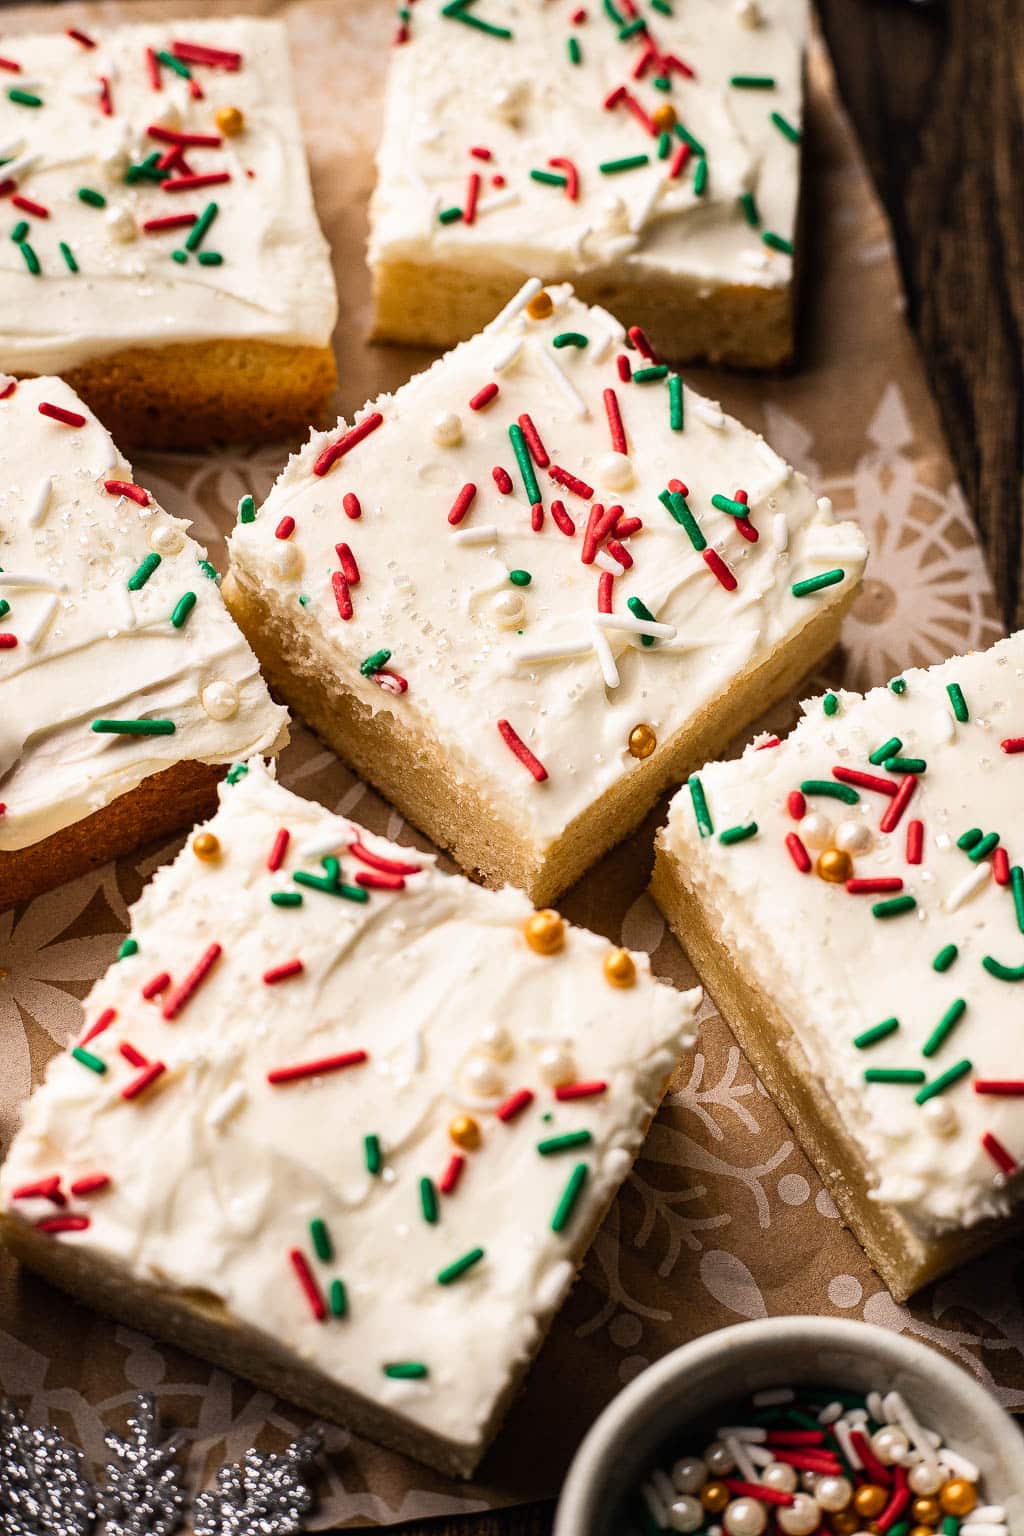 Christmas sugar cookie bars